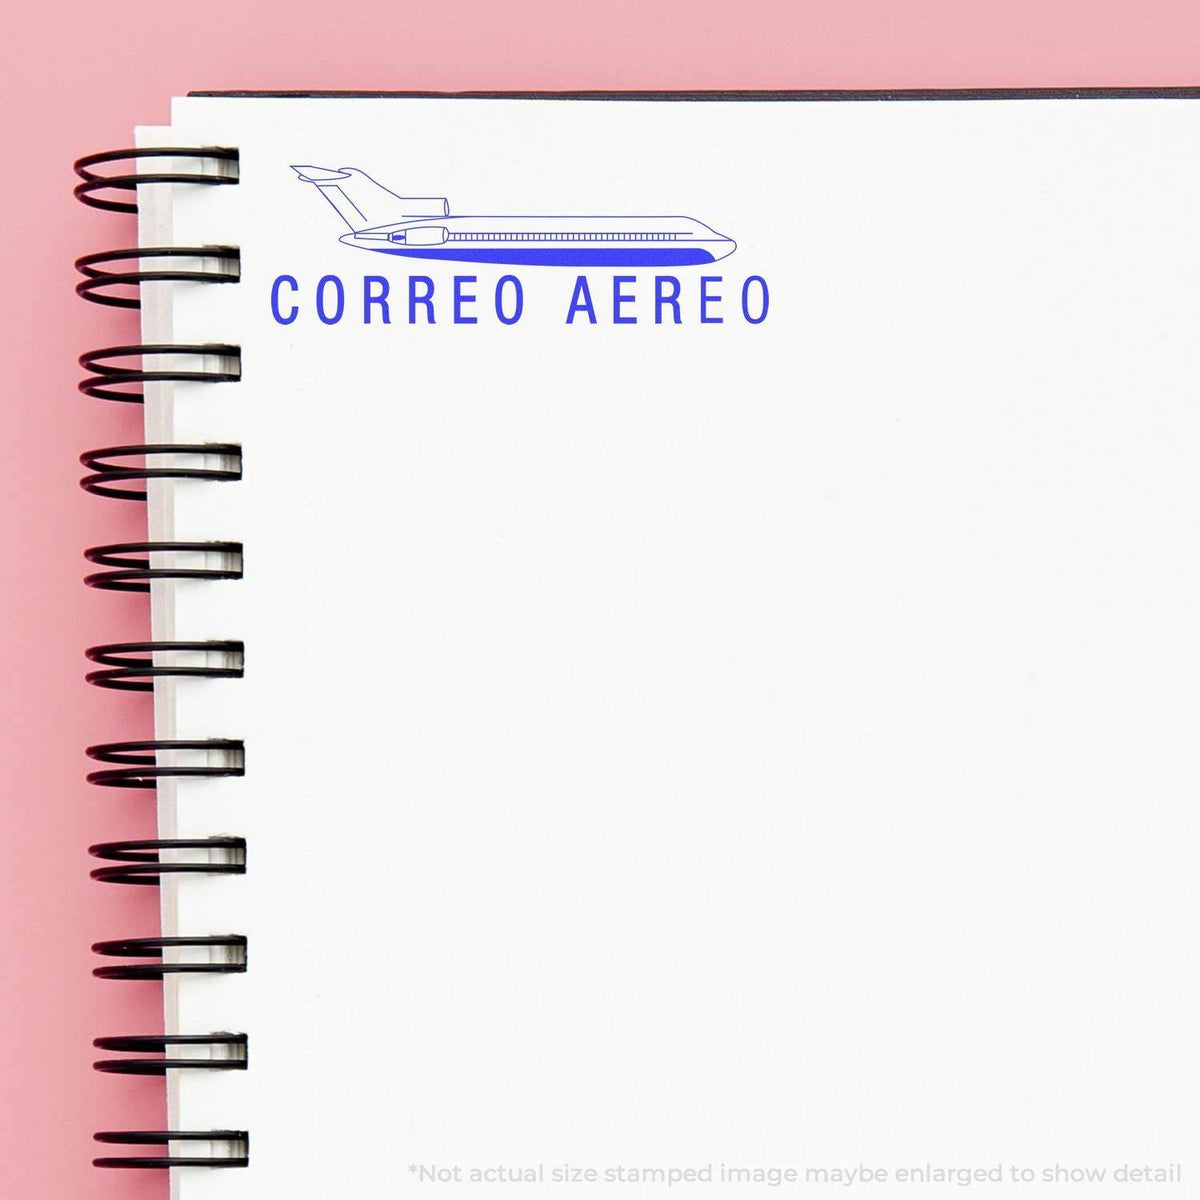 In Use Slim Pre-Inked Correo Aero Stamp Image